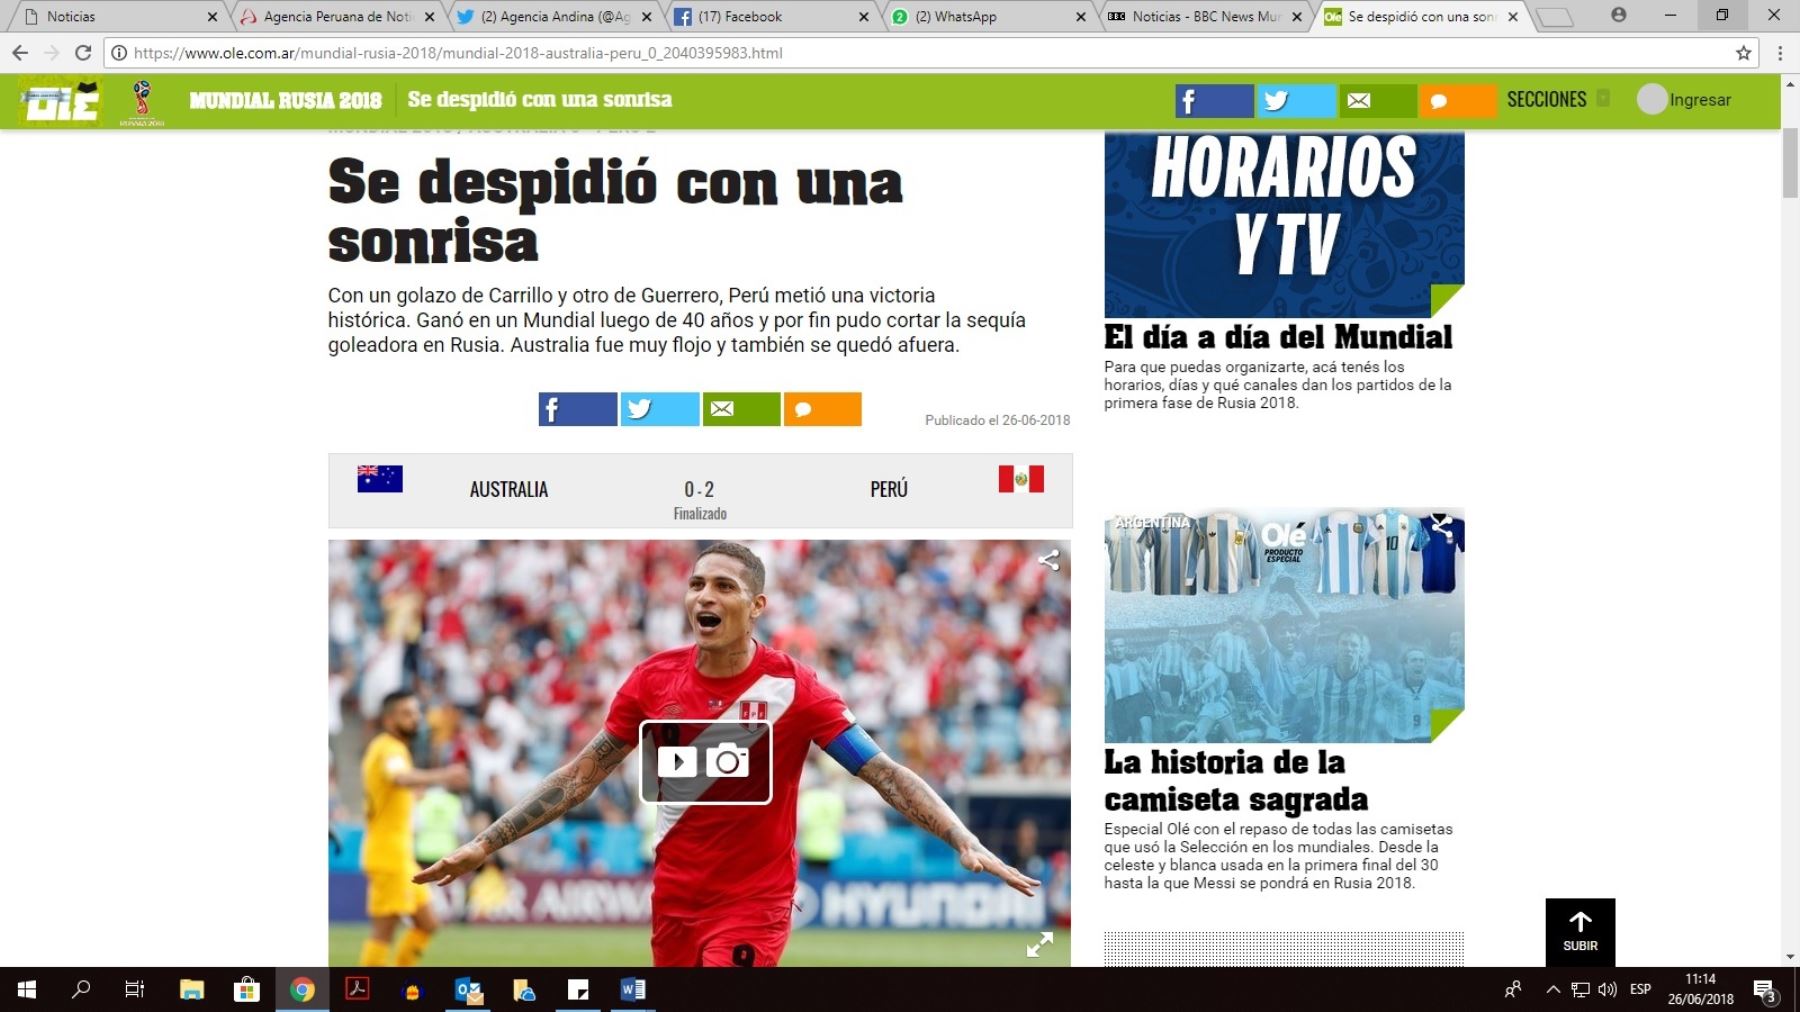 Prensa del mundo destaca triunfo del Perú en despedida del mundial Rusia 2018. Ganó 2 -0 a Australia